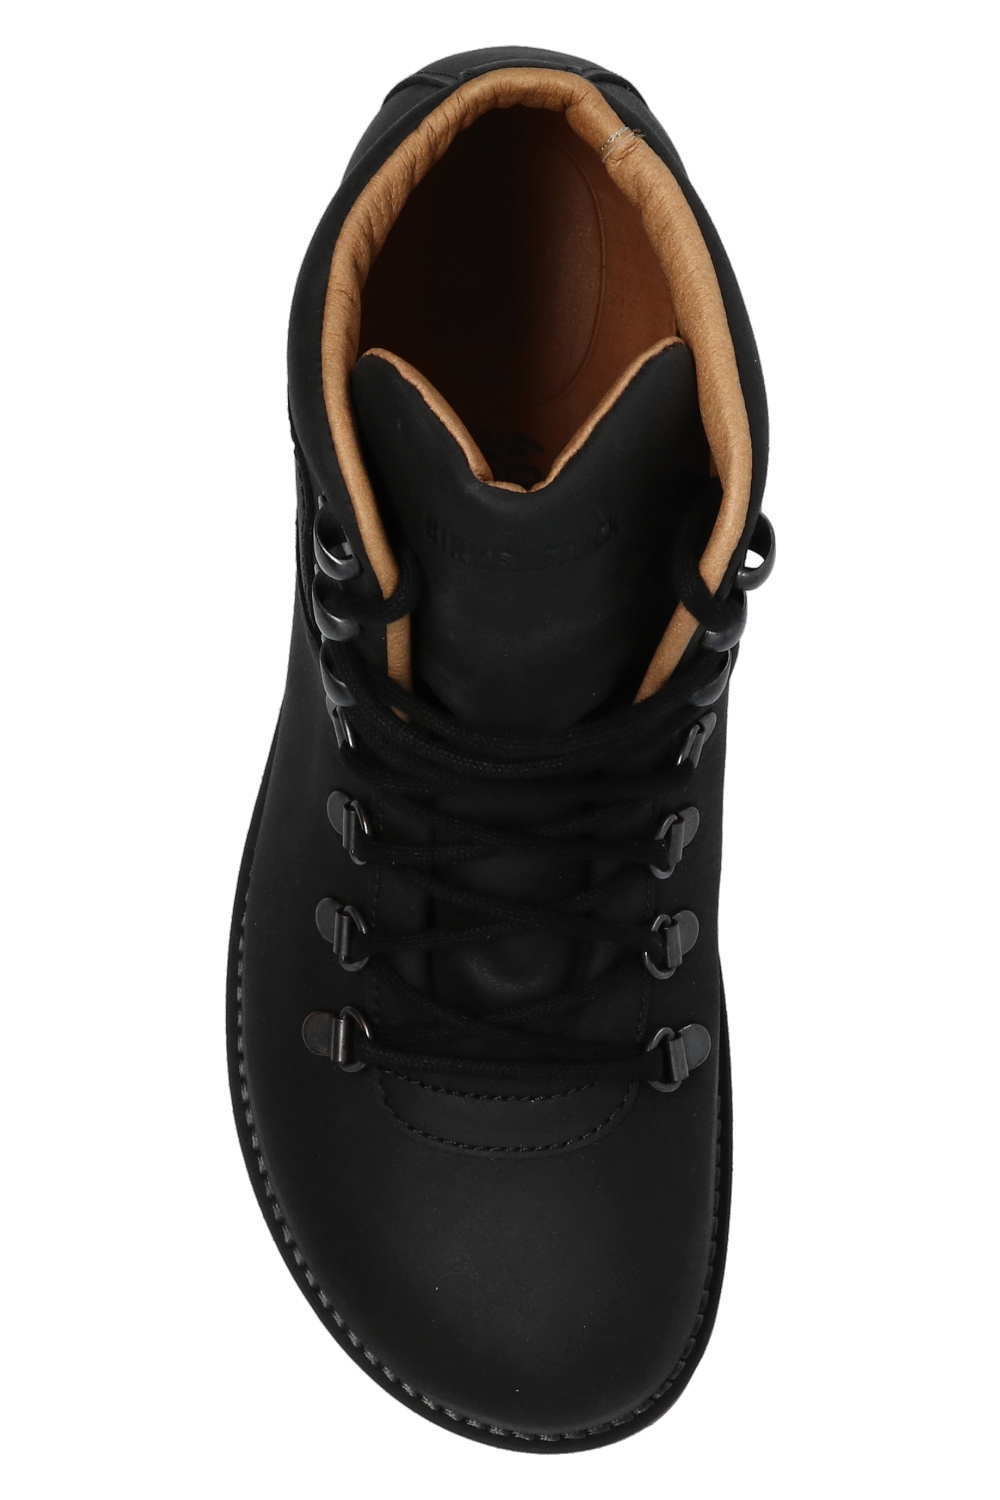 Birkenstock ‘Jackson’ leather ankle boots